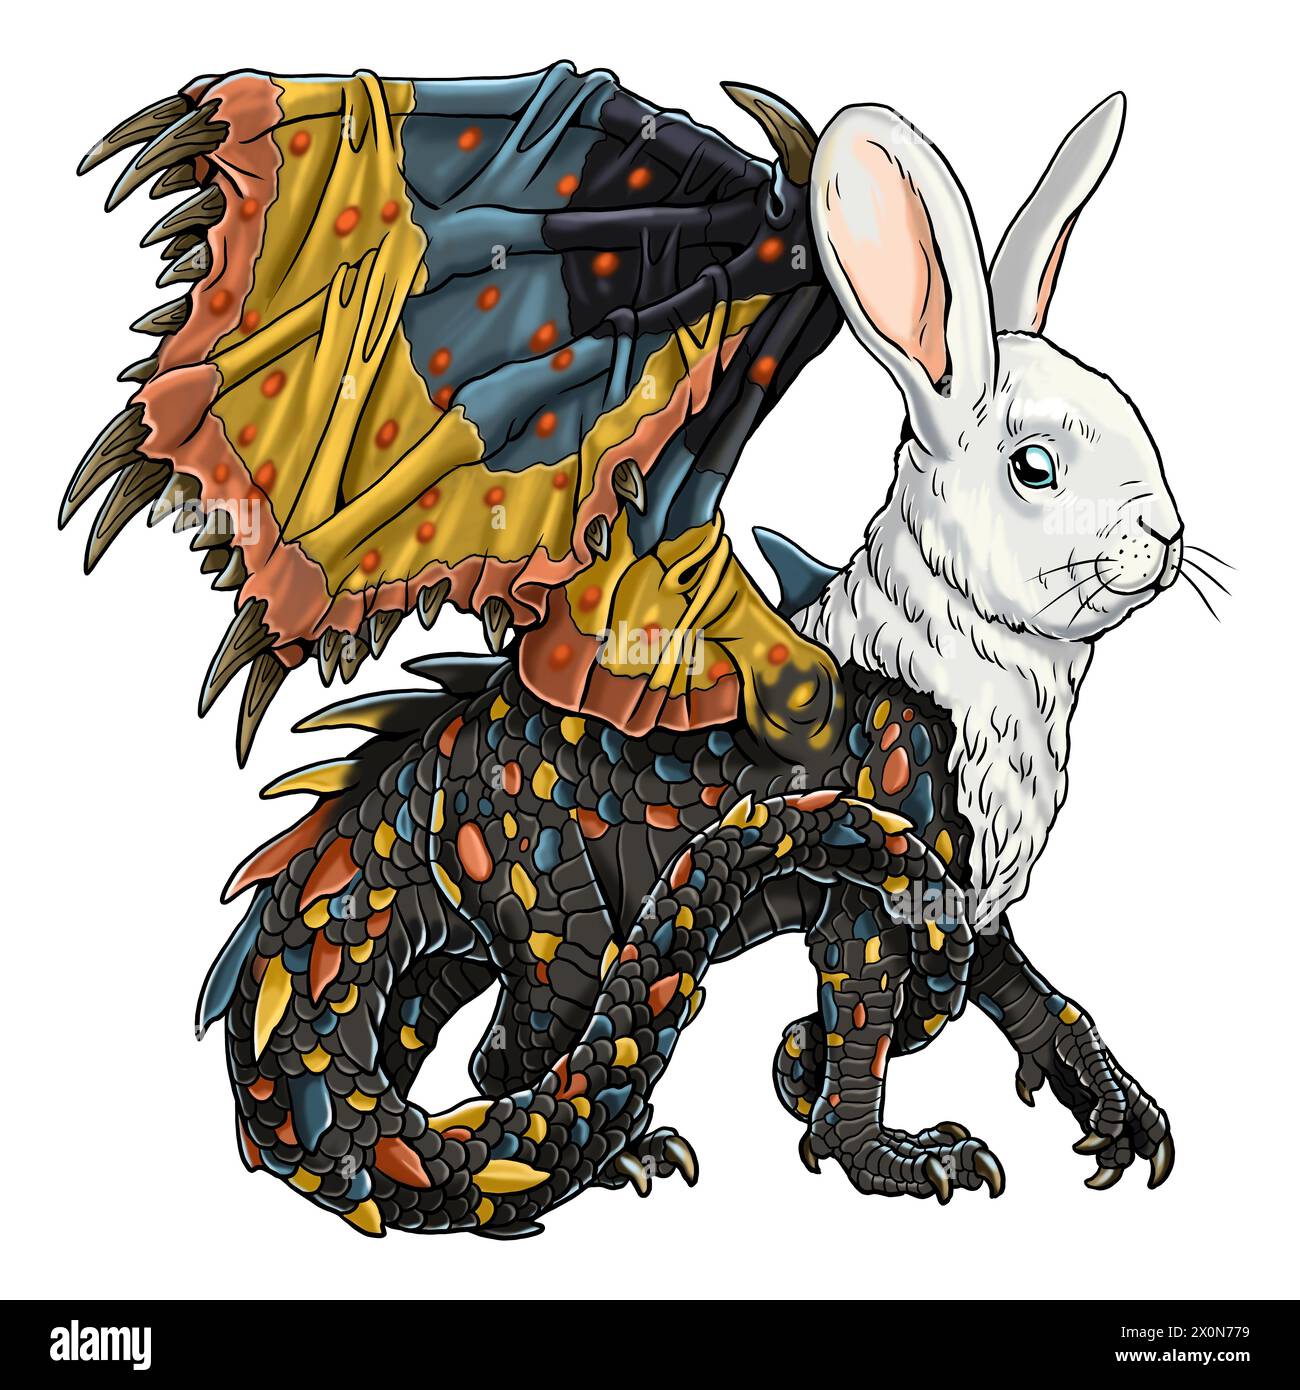 Animal muntant: Dragon with the hare's head. Fantasy creature. Stock Photo